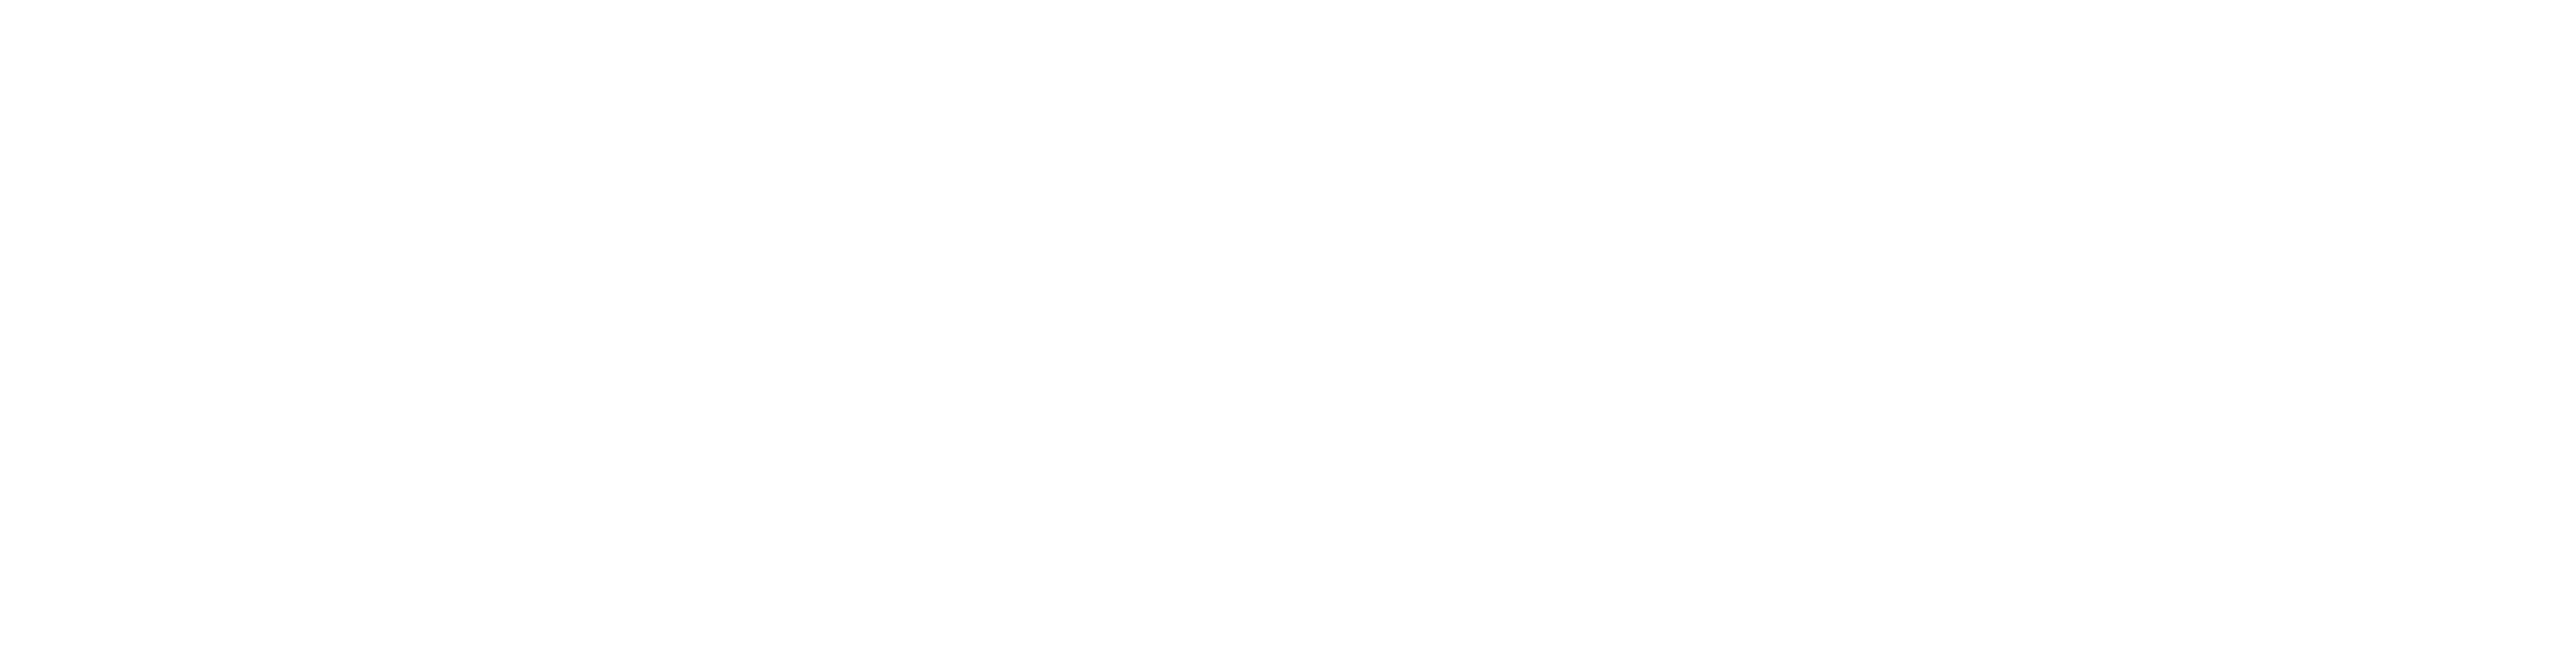 Waitrose-logo-transparent-1